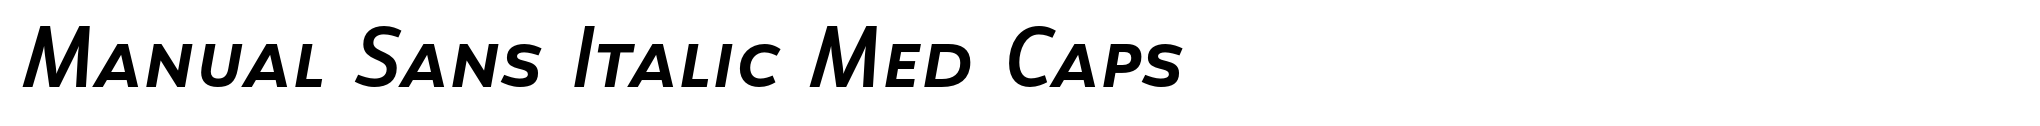 Manual Sans Italic Med Caps image